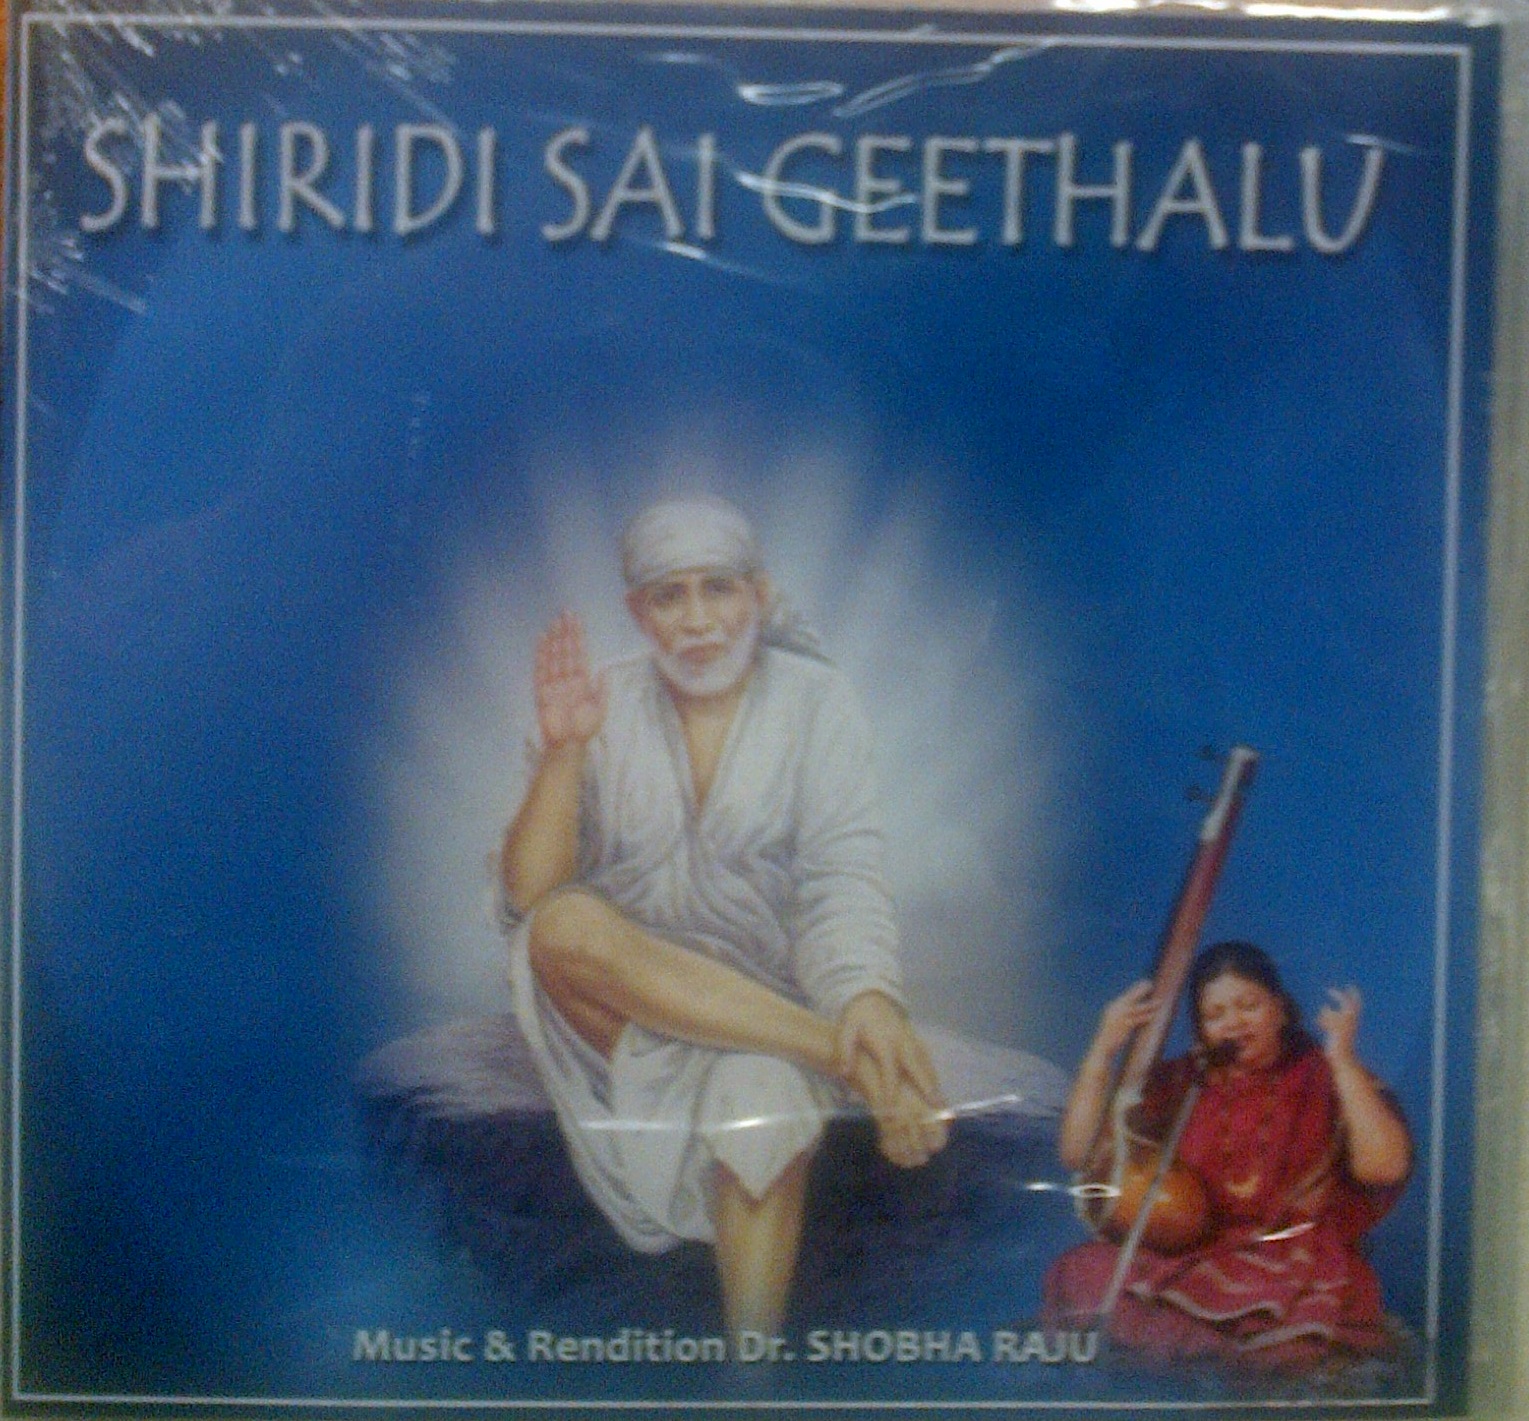 Shirdi Sai Geethalu